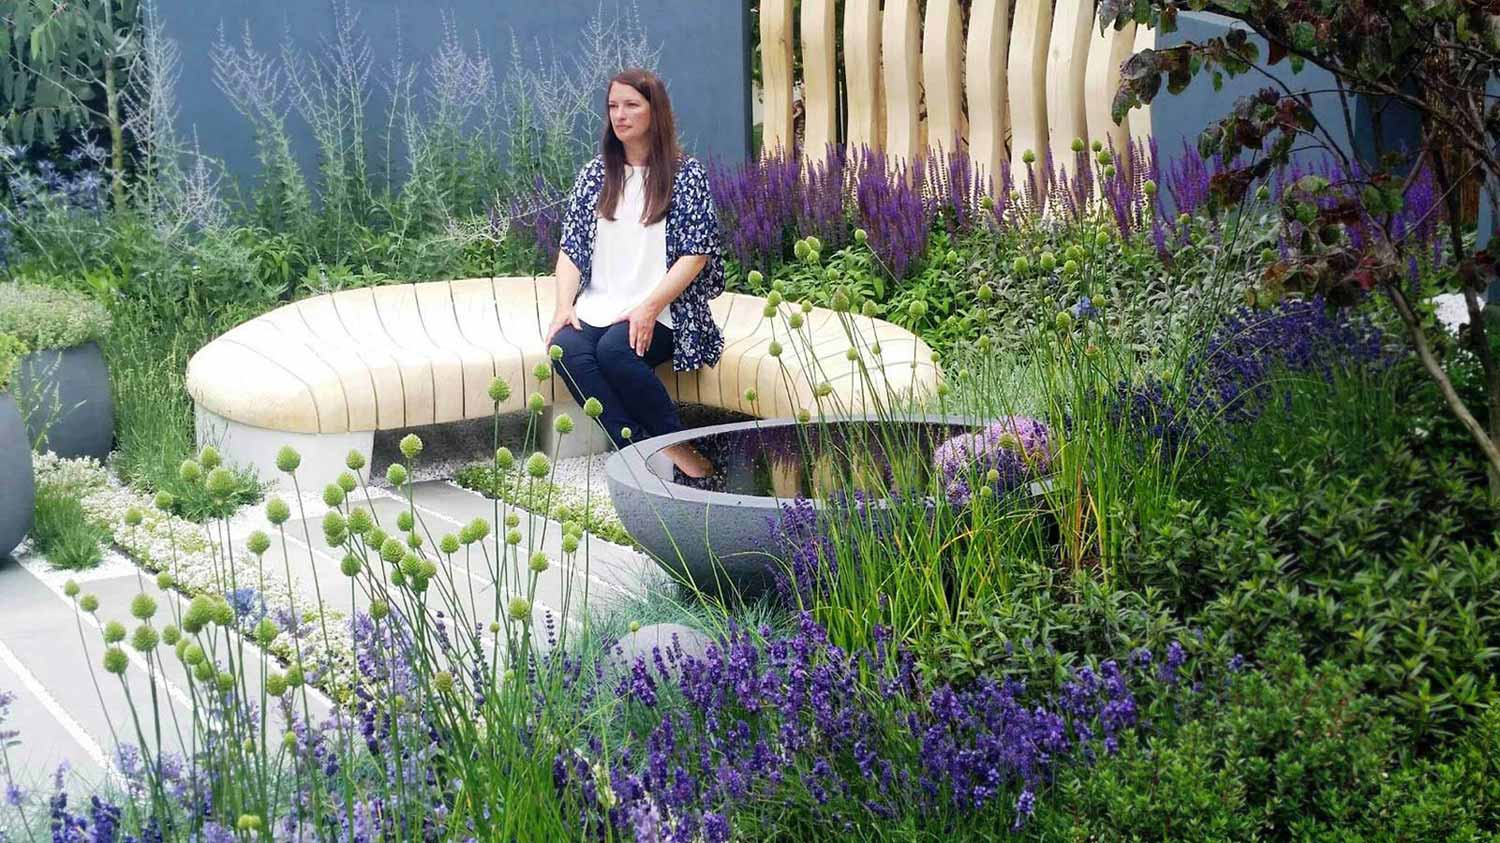 Rachel de Thame in Rae Wilkinson's Hampton Court Healing Urban Garden. Rae Wilkinson Garden and Landscape Design Surrey, Sussex, Hampshire, London, South-East England